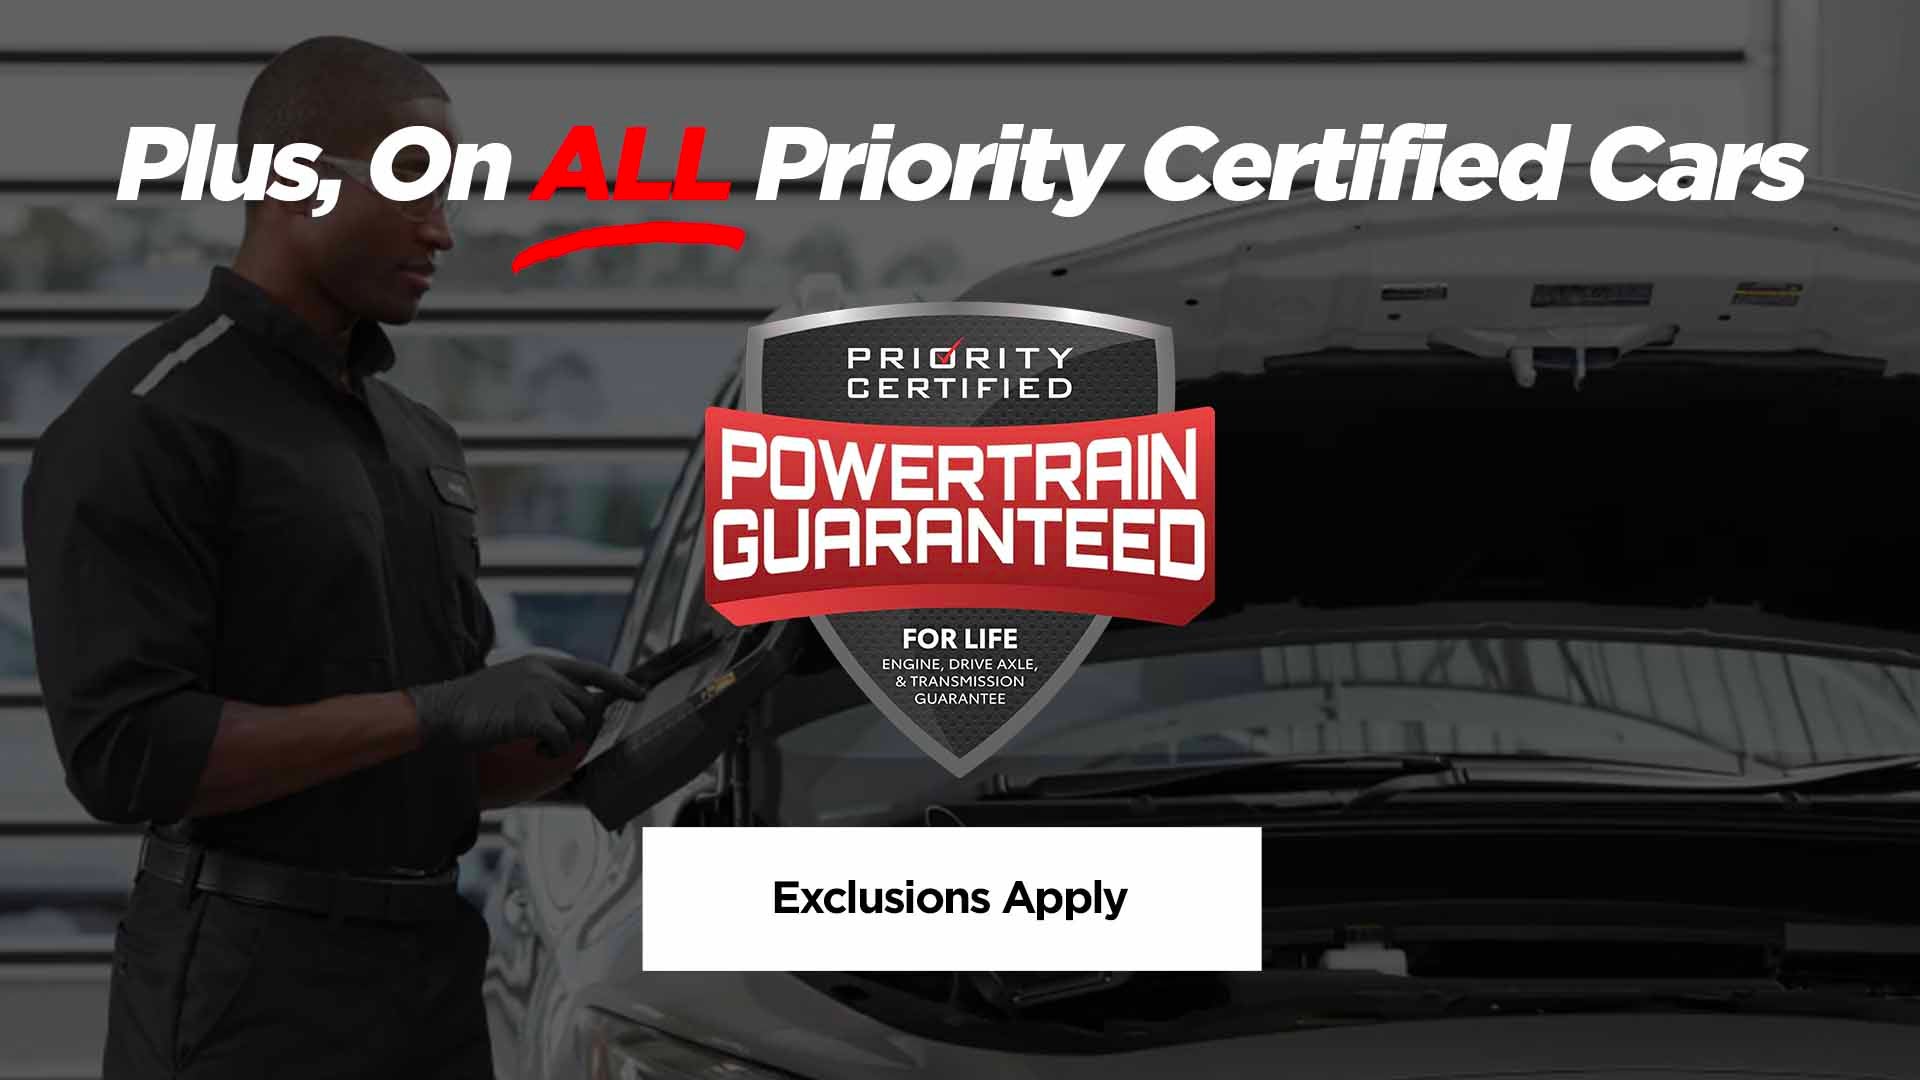 Priority Chevrolet in Newport News VA, Powertrain Guaranteed on Priority Certified Cars*